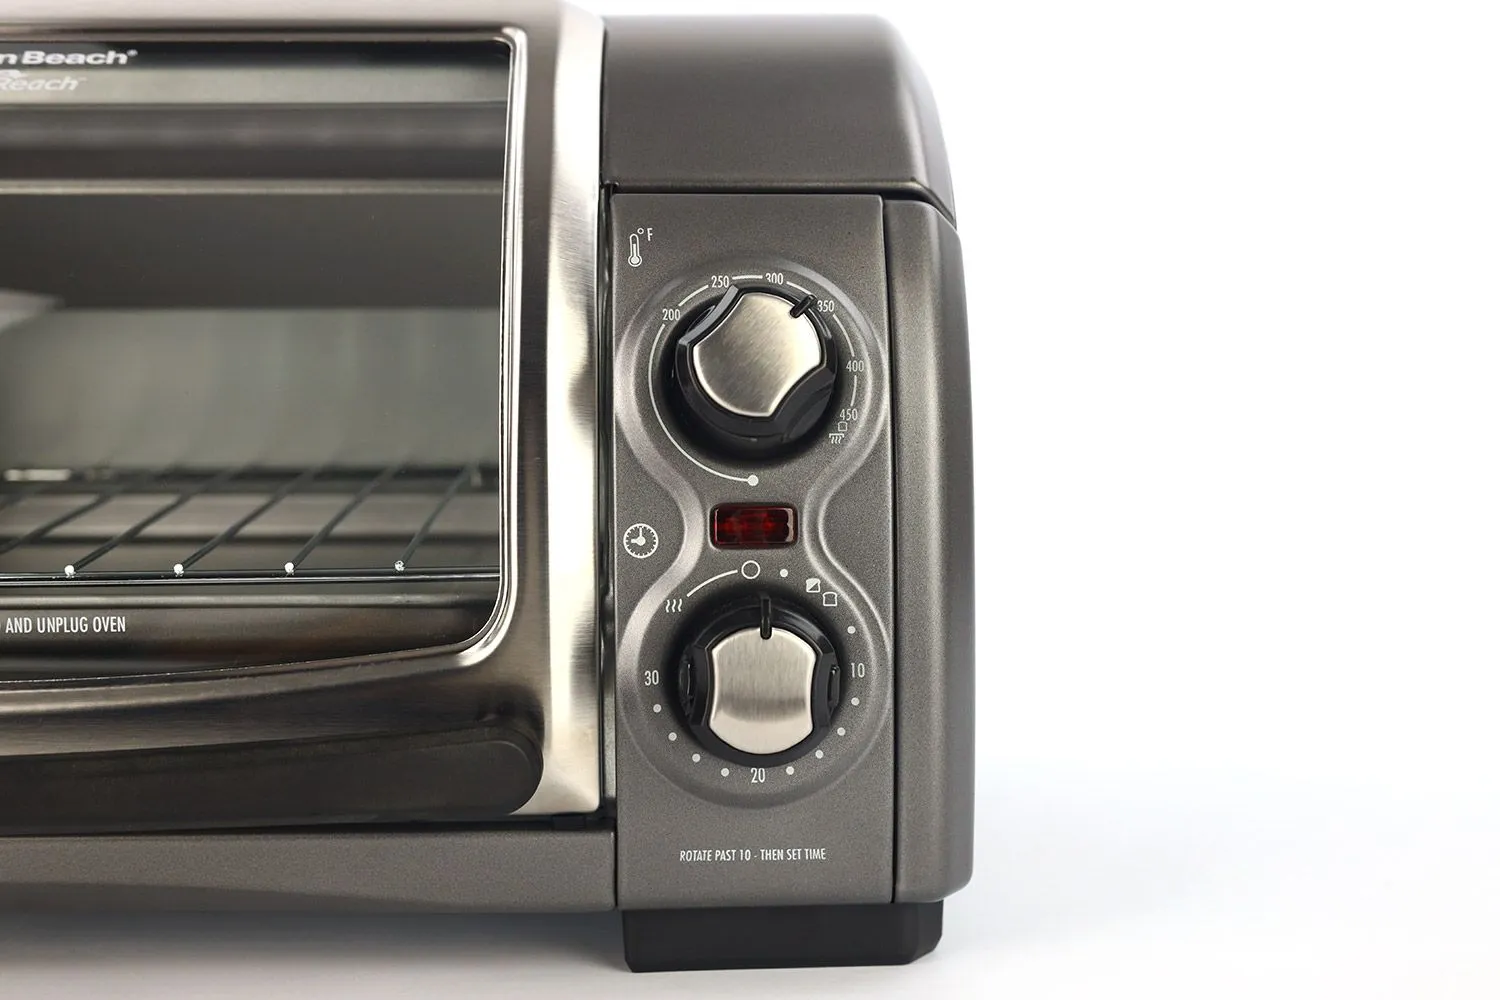 Hamilton Beach Easy Reach 4 Slice Toaster Oven Review – Felt Like